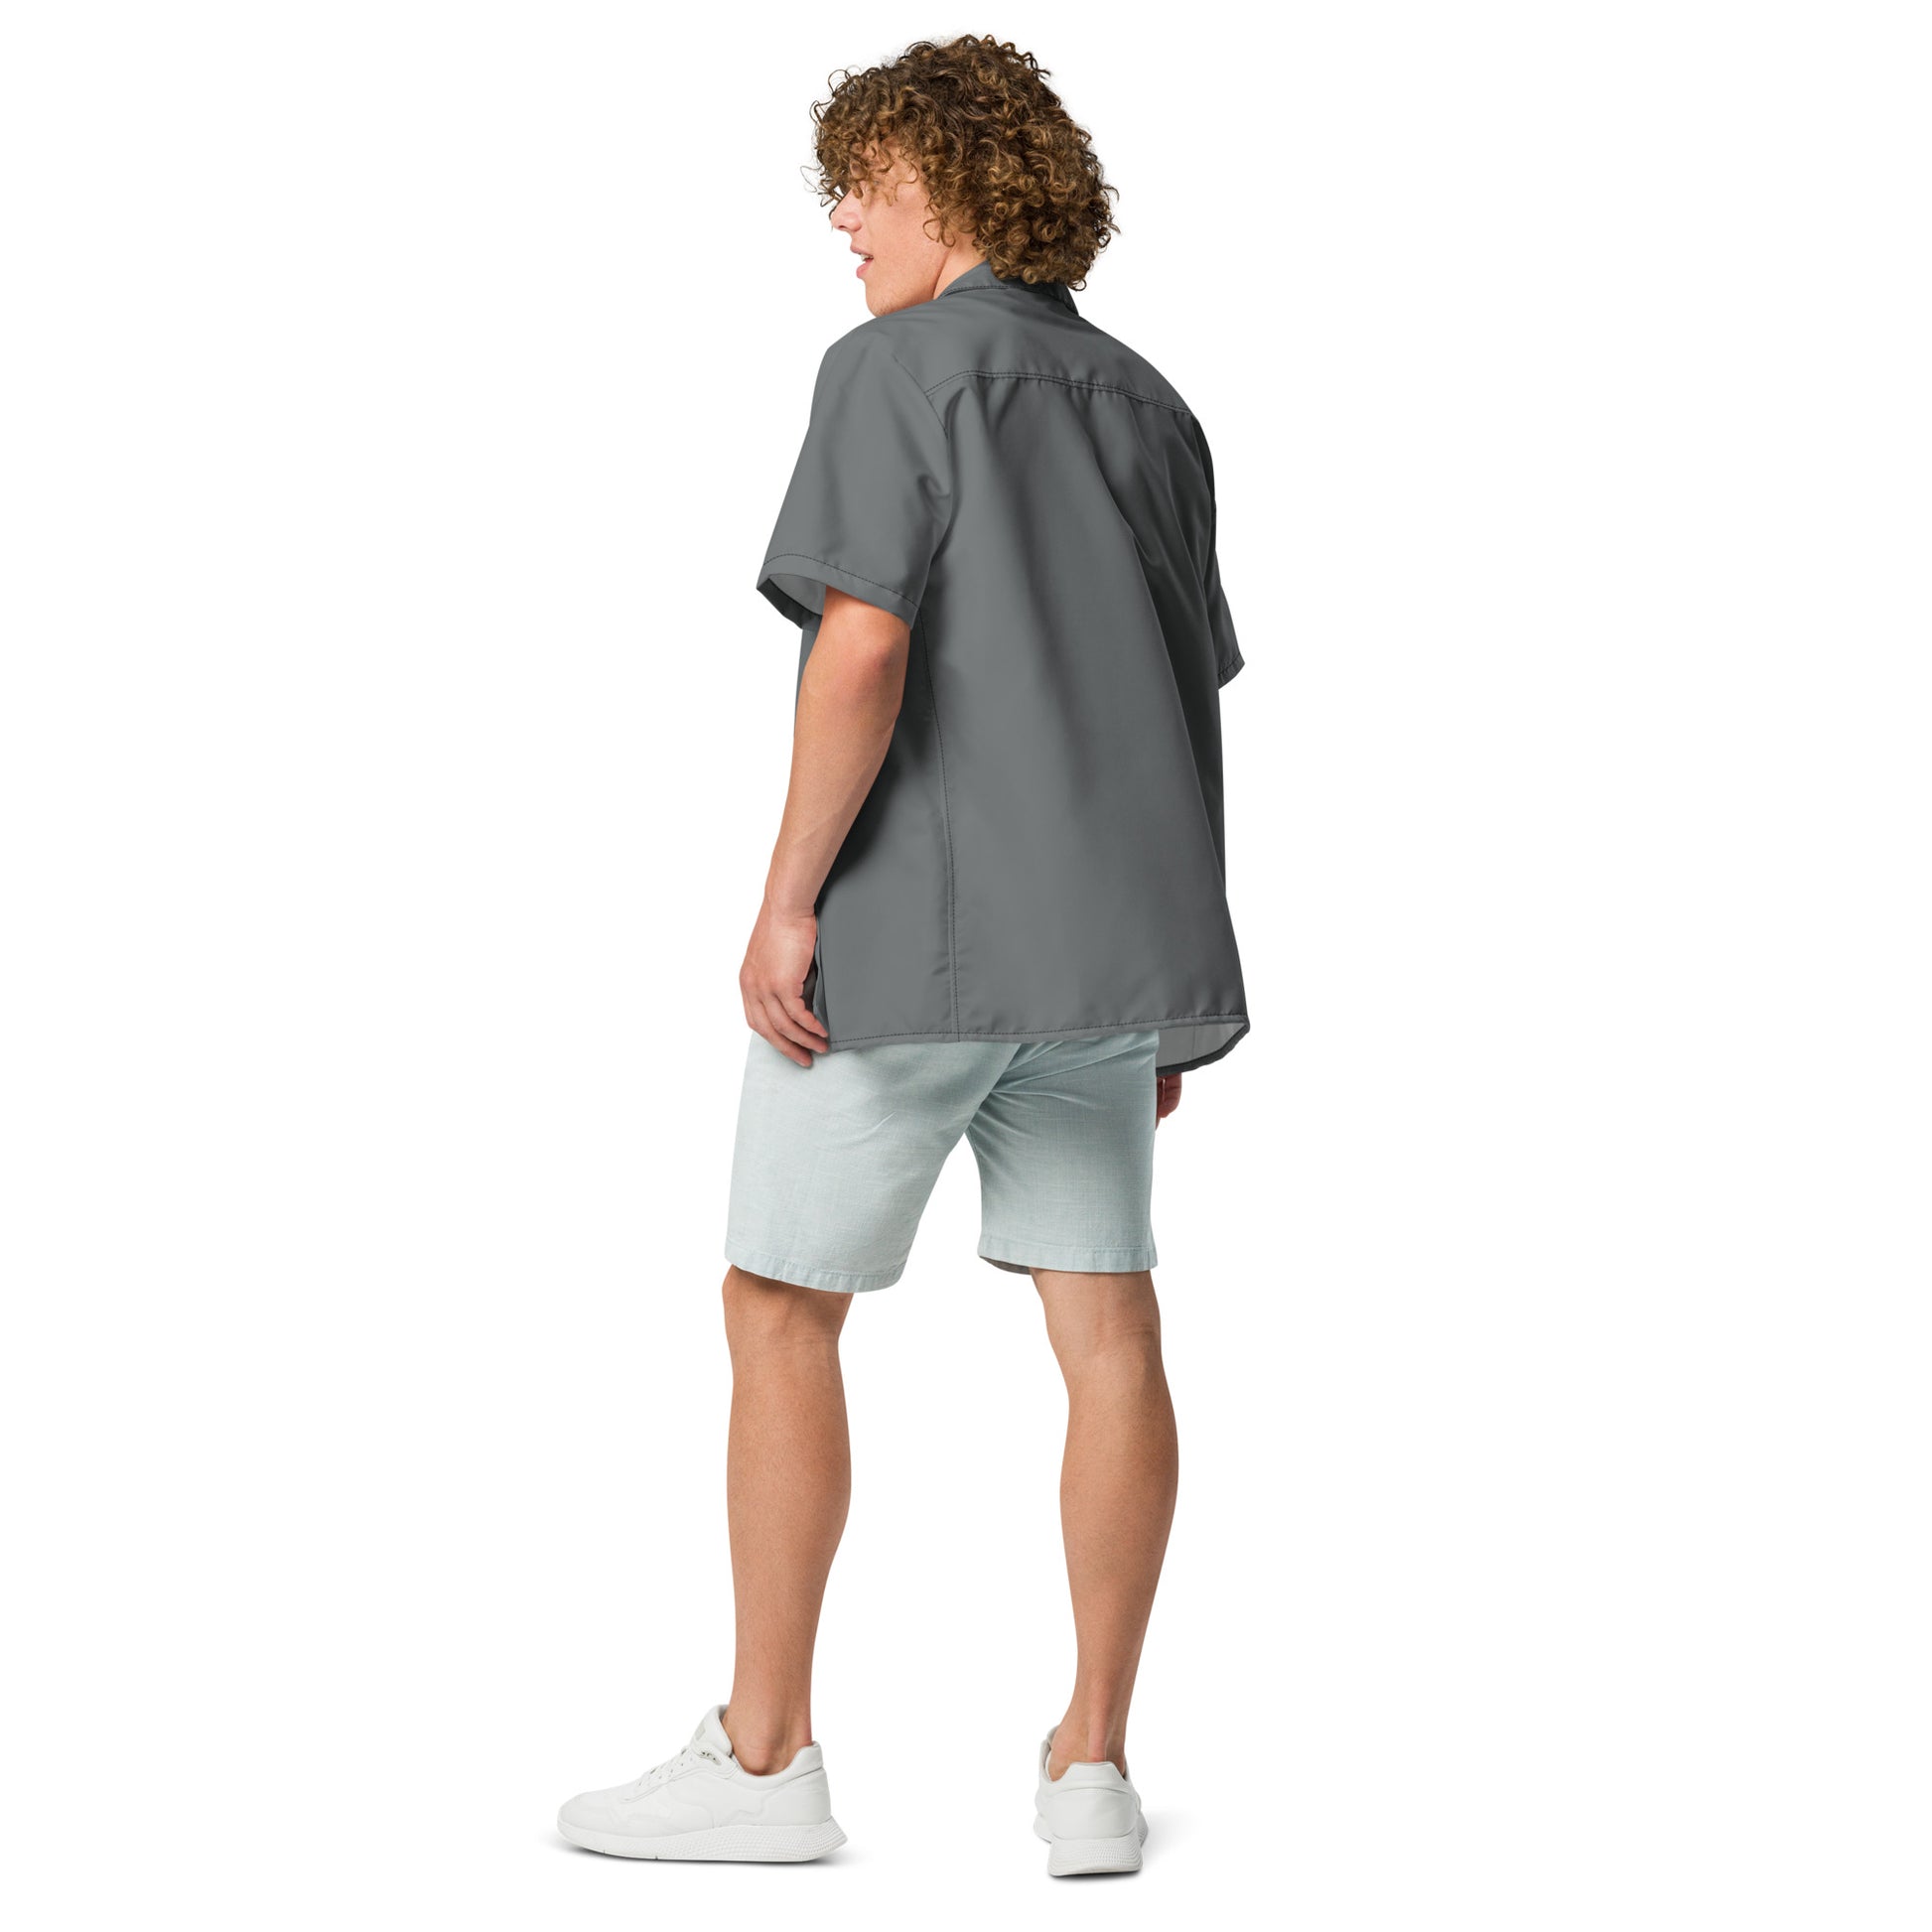 Shadow Grey button shirt - Tropical Seas Clothing 